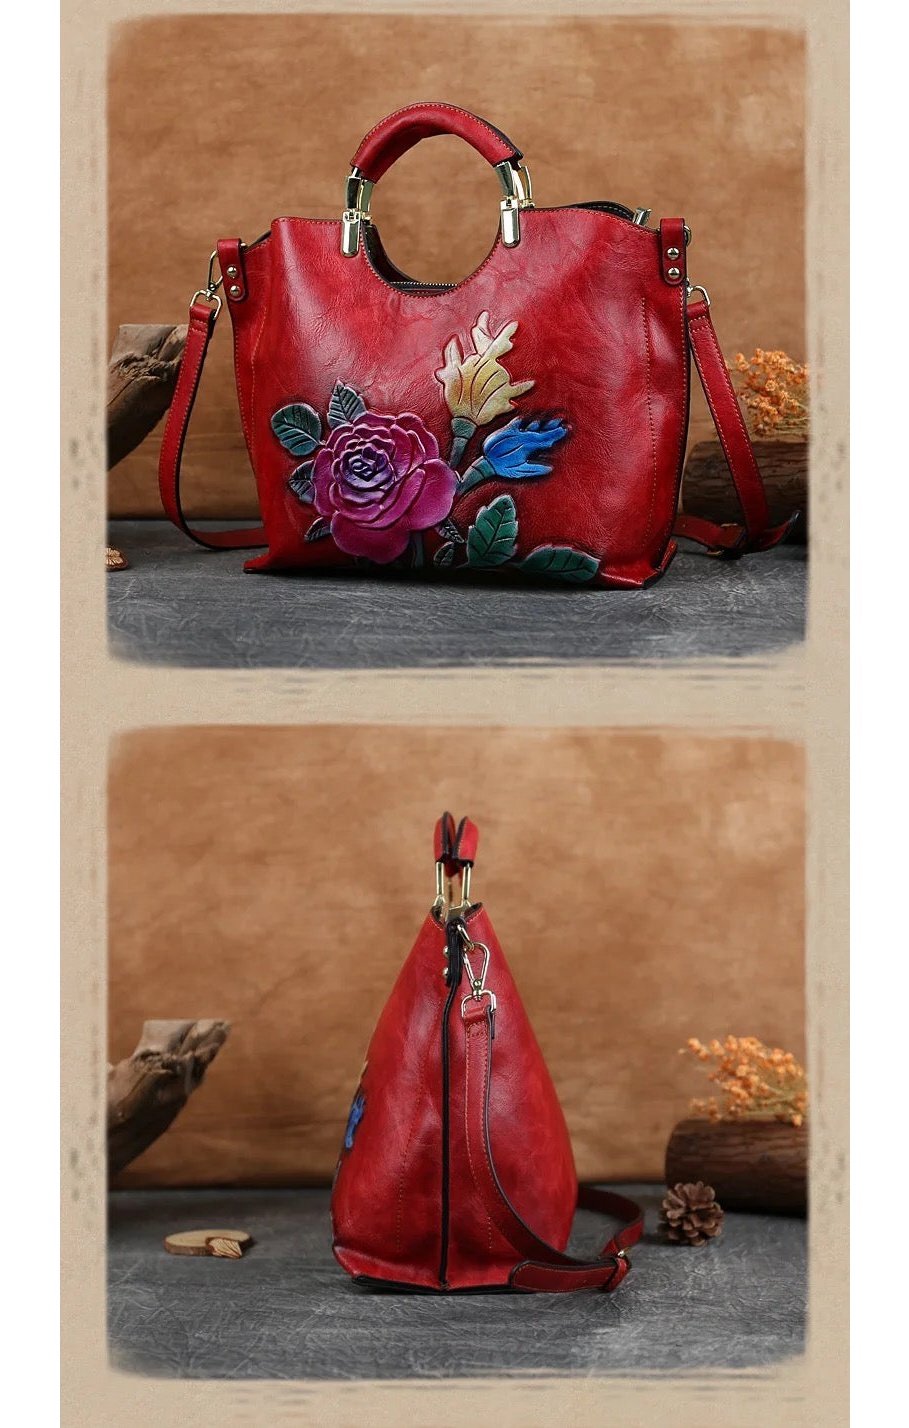 Luxury Handmade Embossed Floral Shoulder Bag (Many Colors)